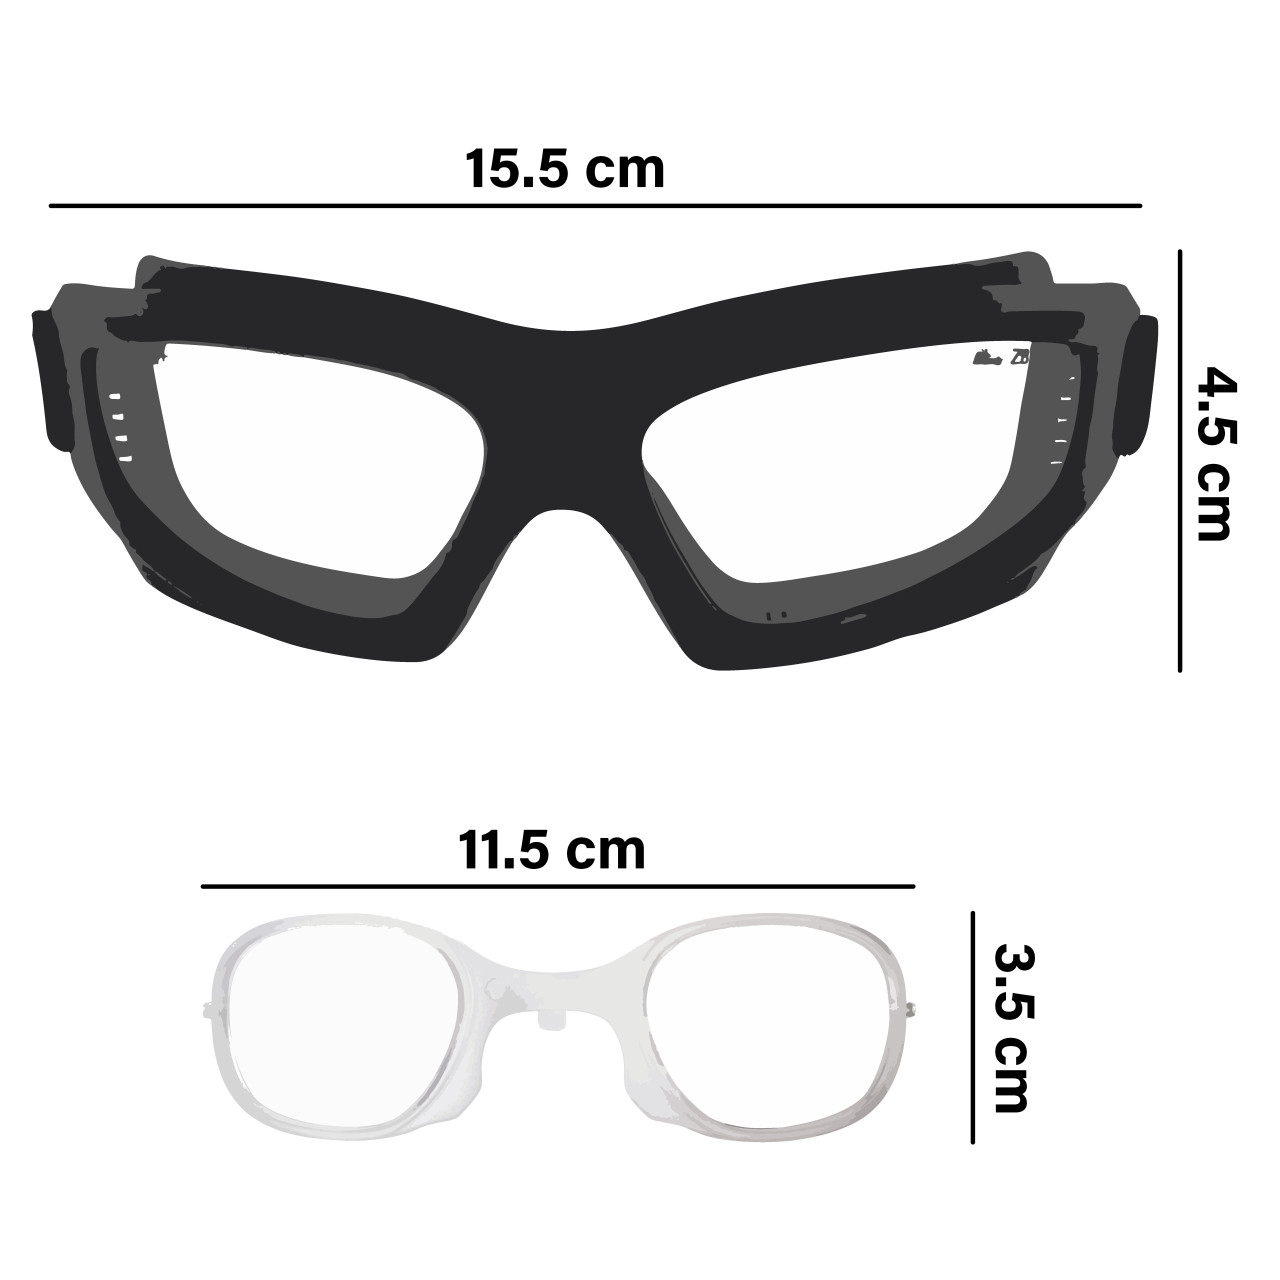 Birdz Eyewear Flamingo Safety Glasses for Nurses Dental Assistant Glasses Shooting  Sunglasses for Women Ladies Men Black Frame w/Blue Mirror Lens 